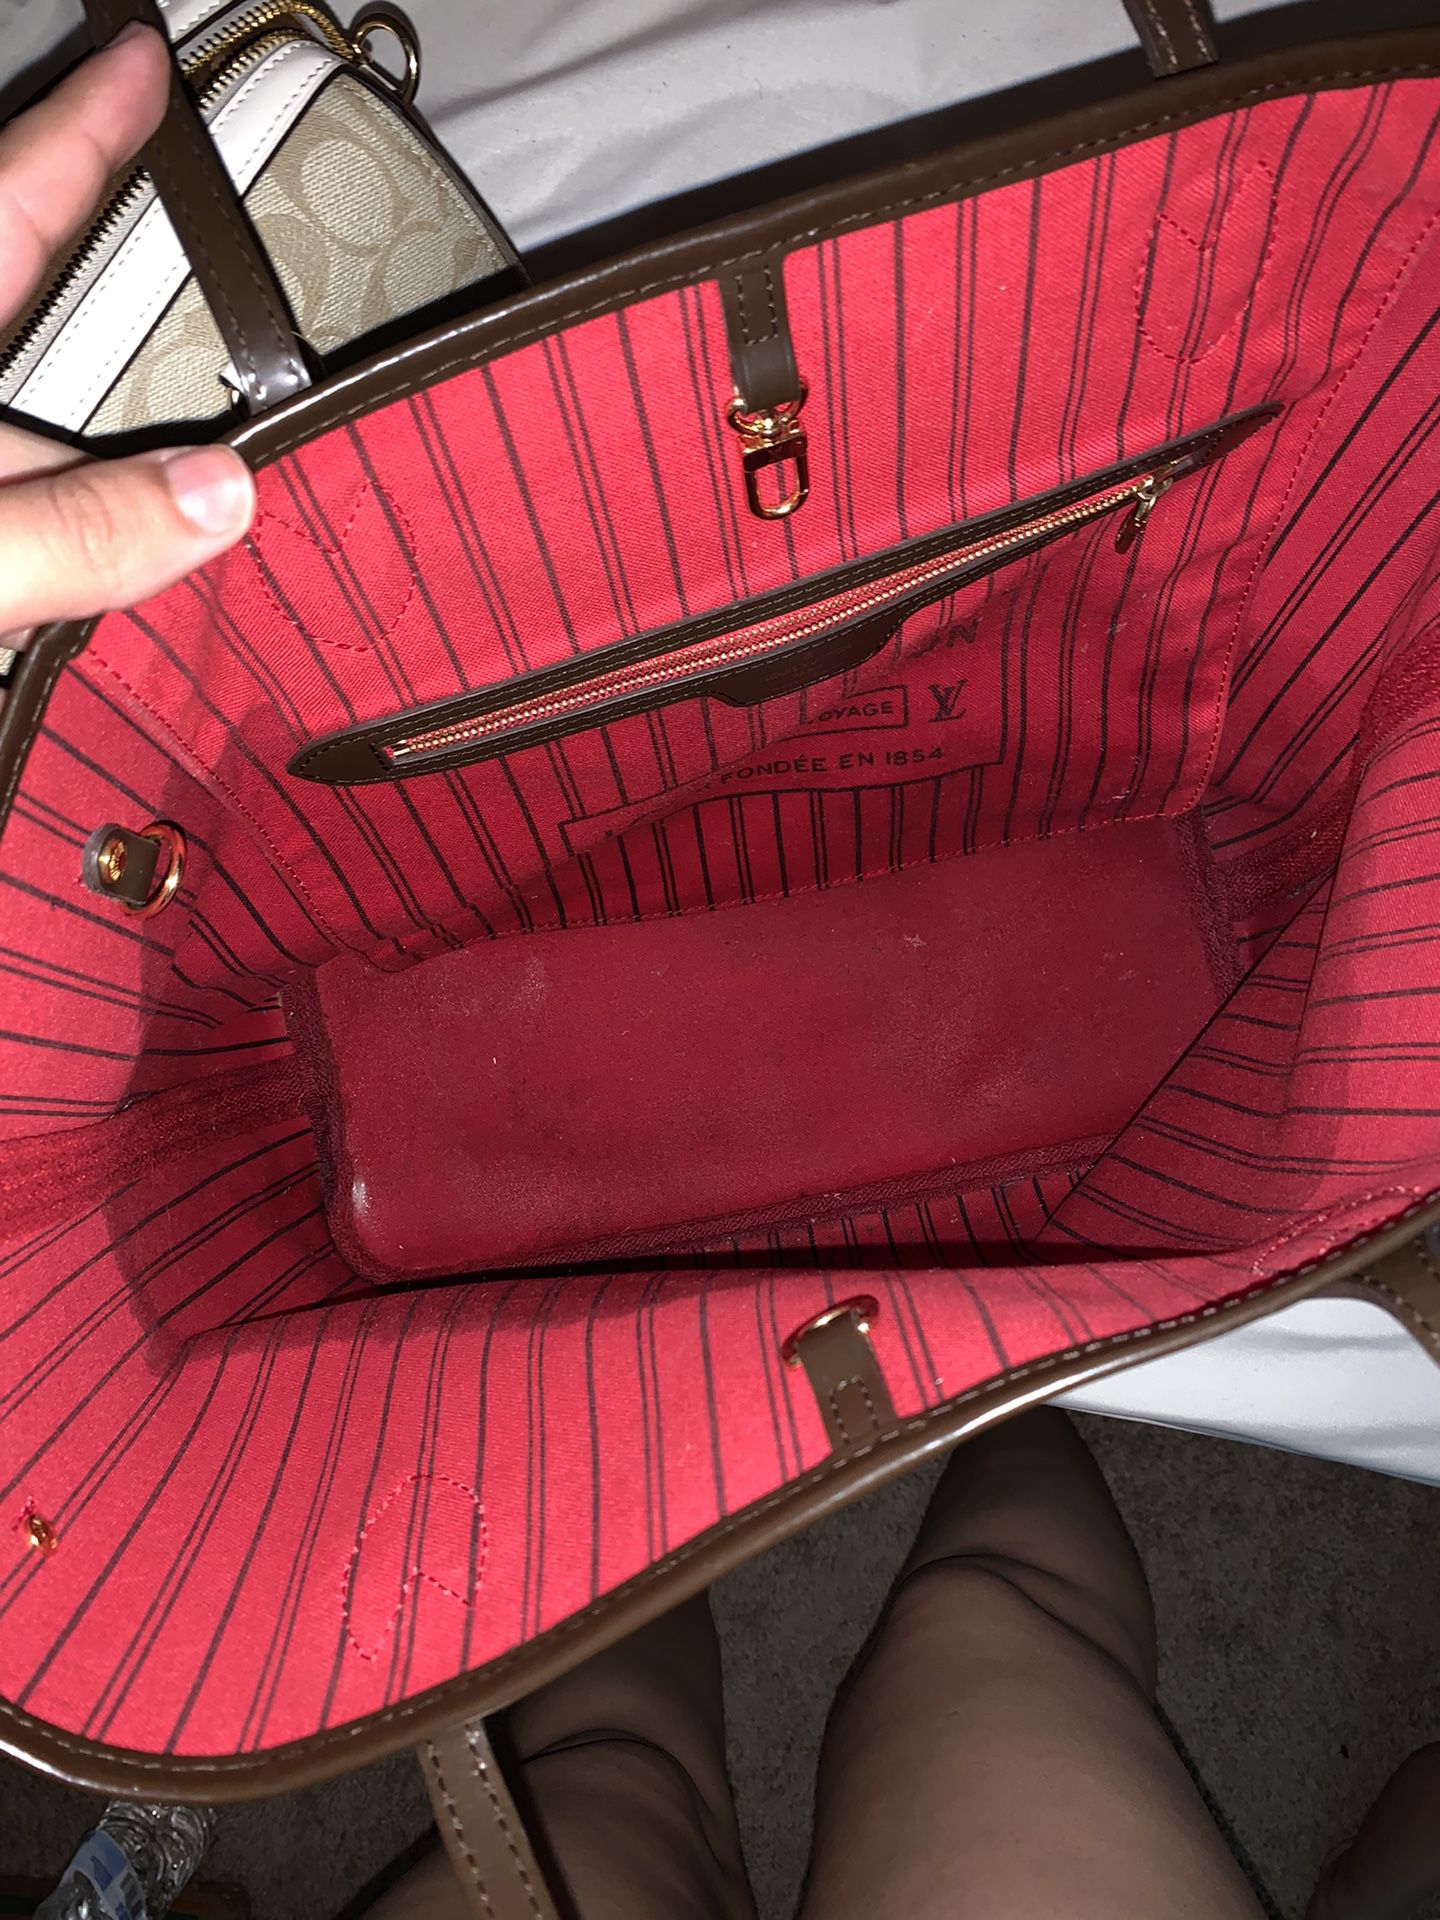 ORDER] Sale. Túi xách Louis Vuitton hình tròn